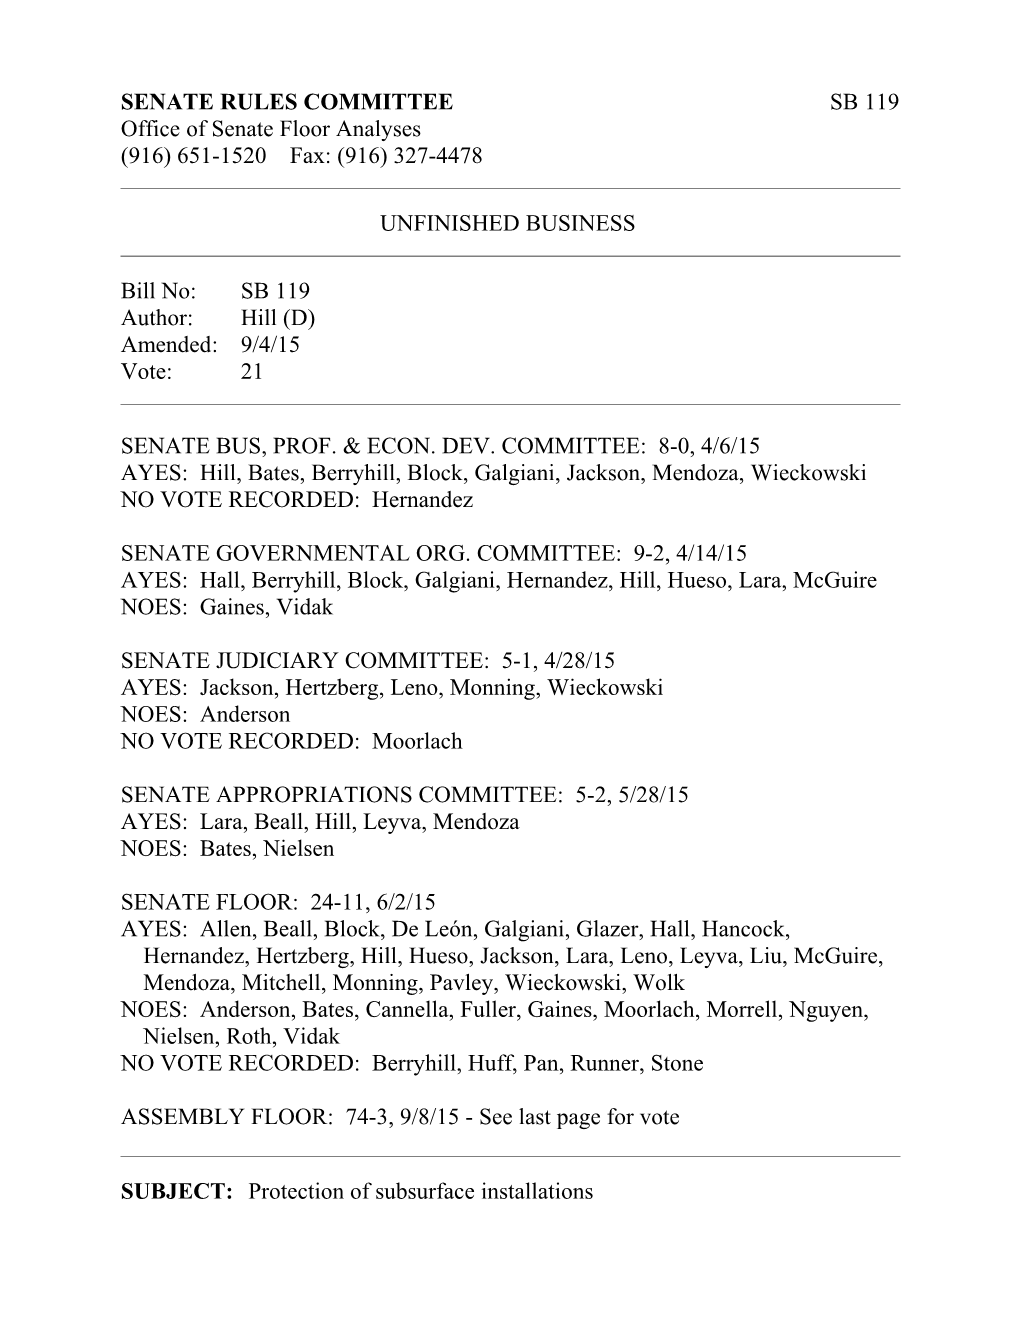 Senate Rules Committee - Senate Floor Analysis s2